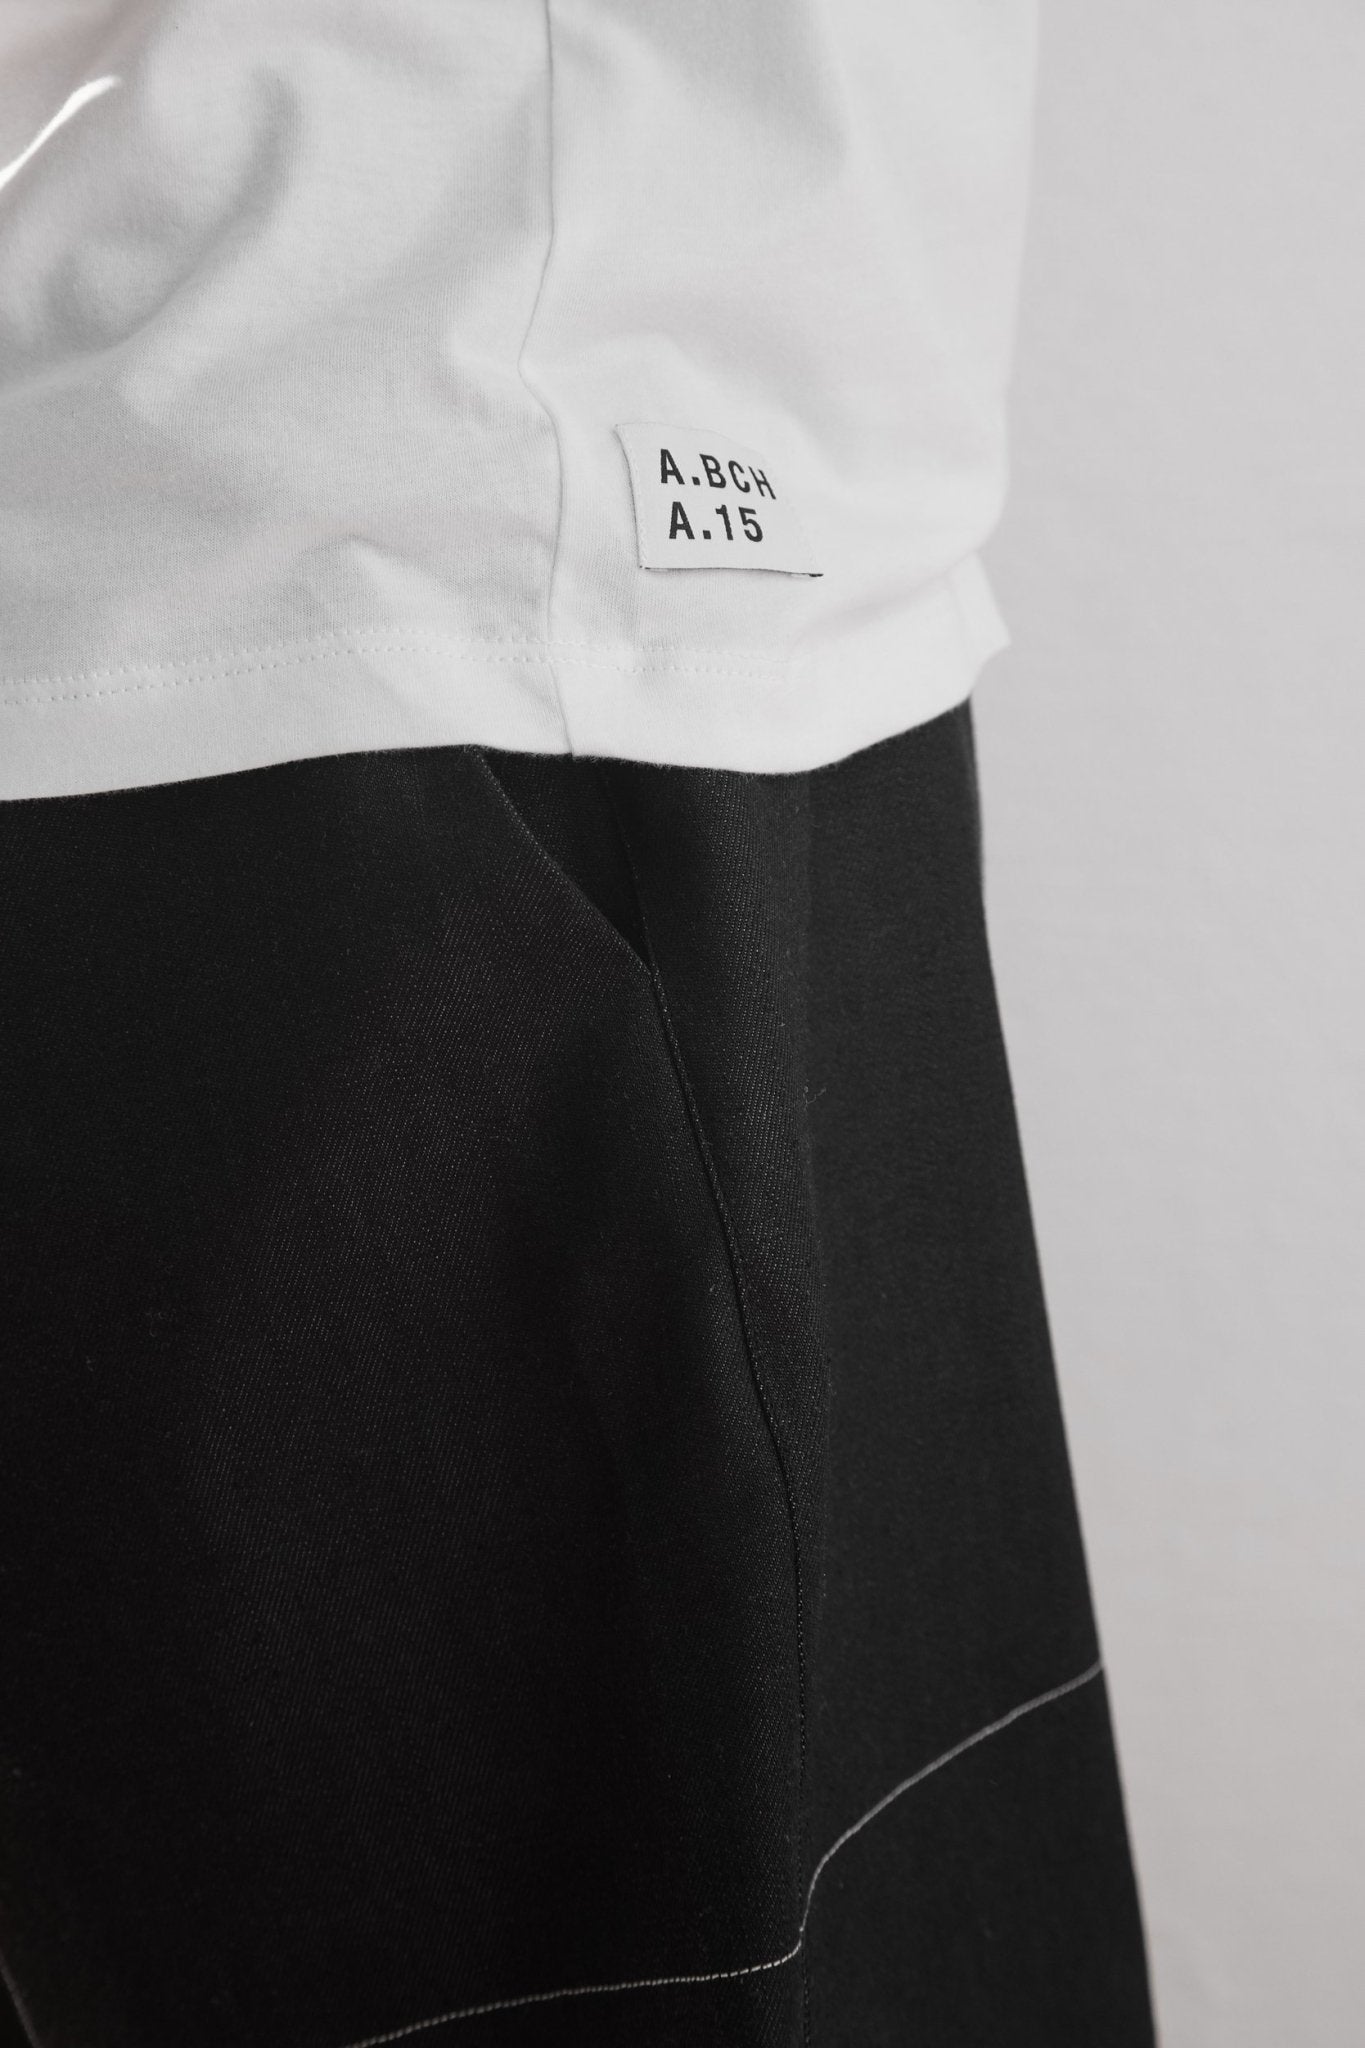 A.BCH A.16 Dark Indigo Signature Shorts in Organic Cotton Raw Denim